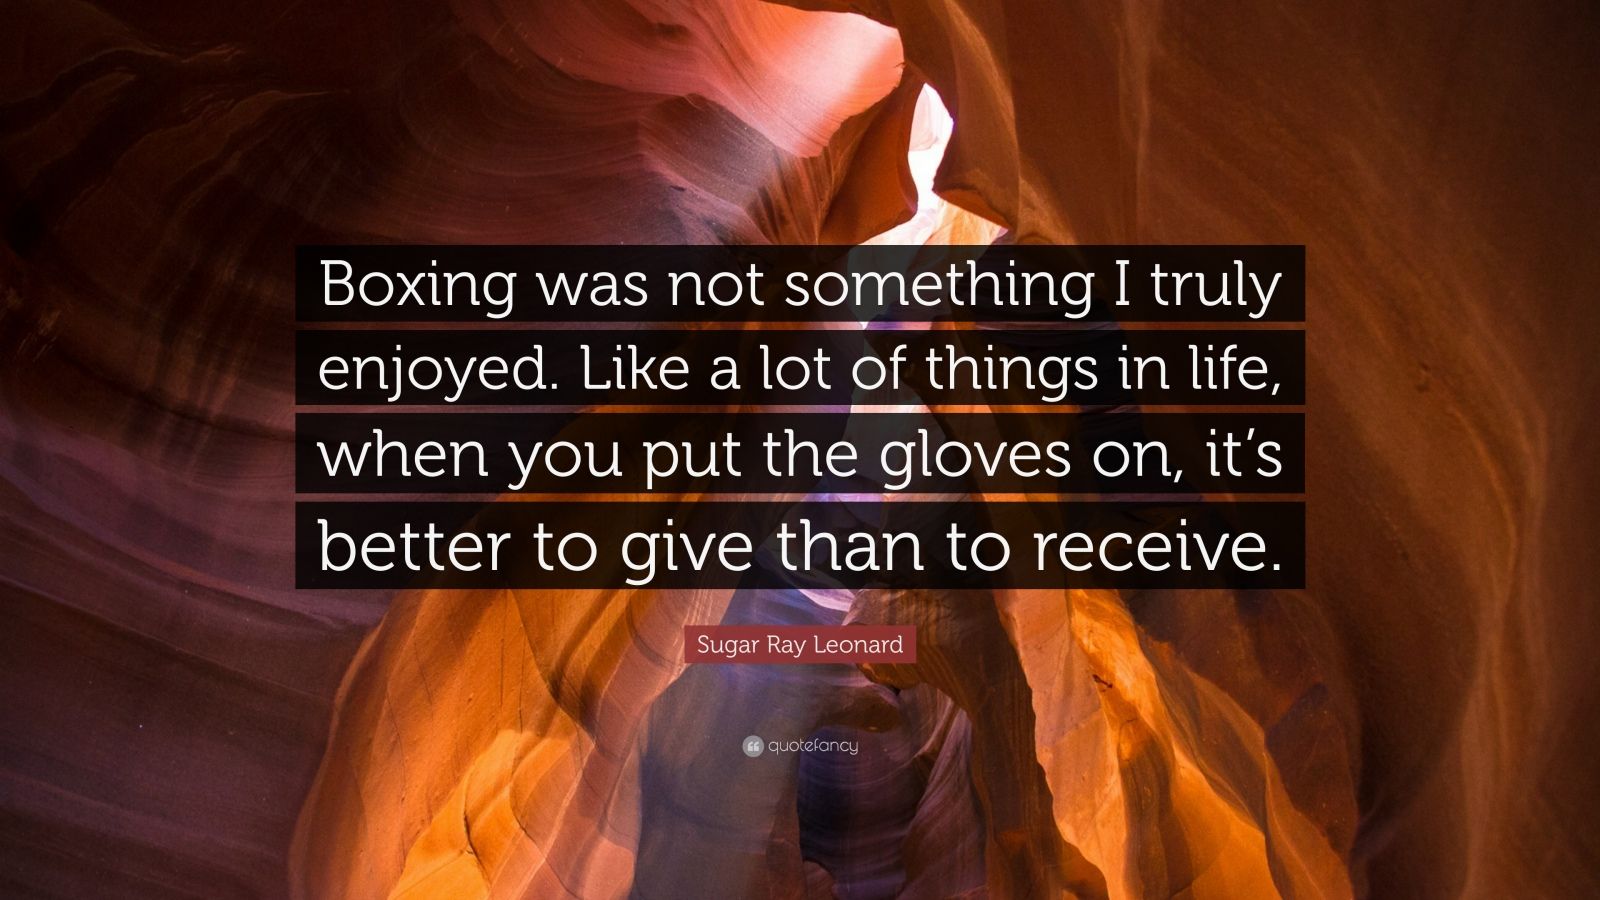 Sugar Ray Leonard Quote “Boxing was not something I truly enjoyed Like a